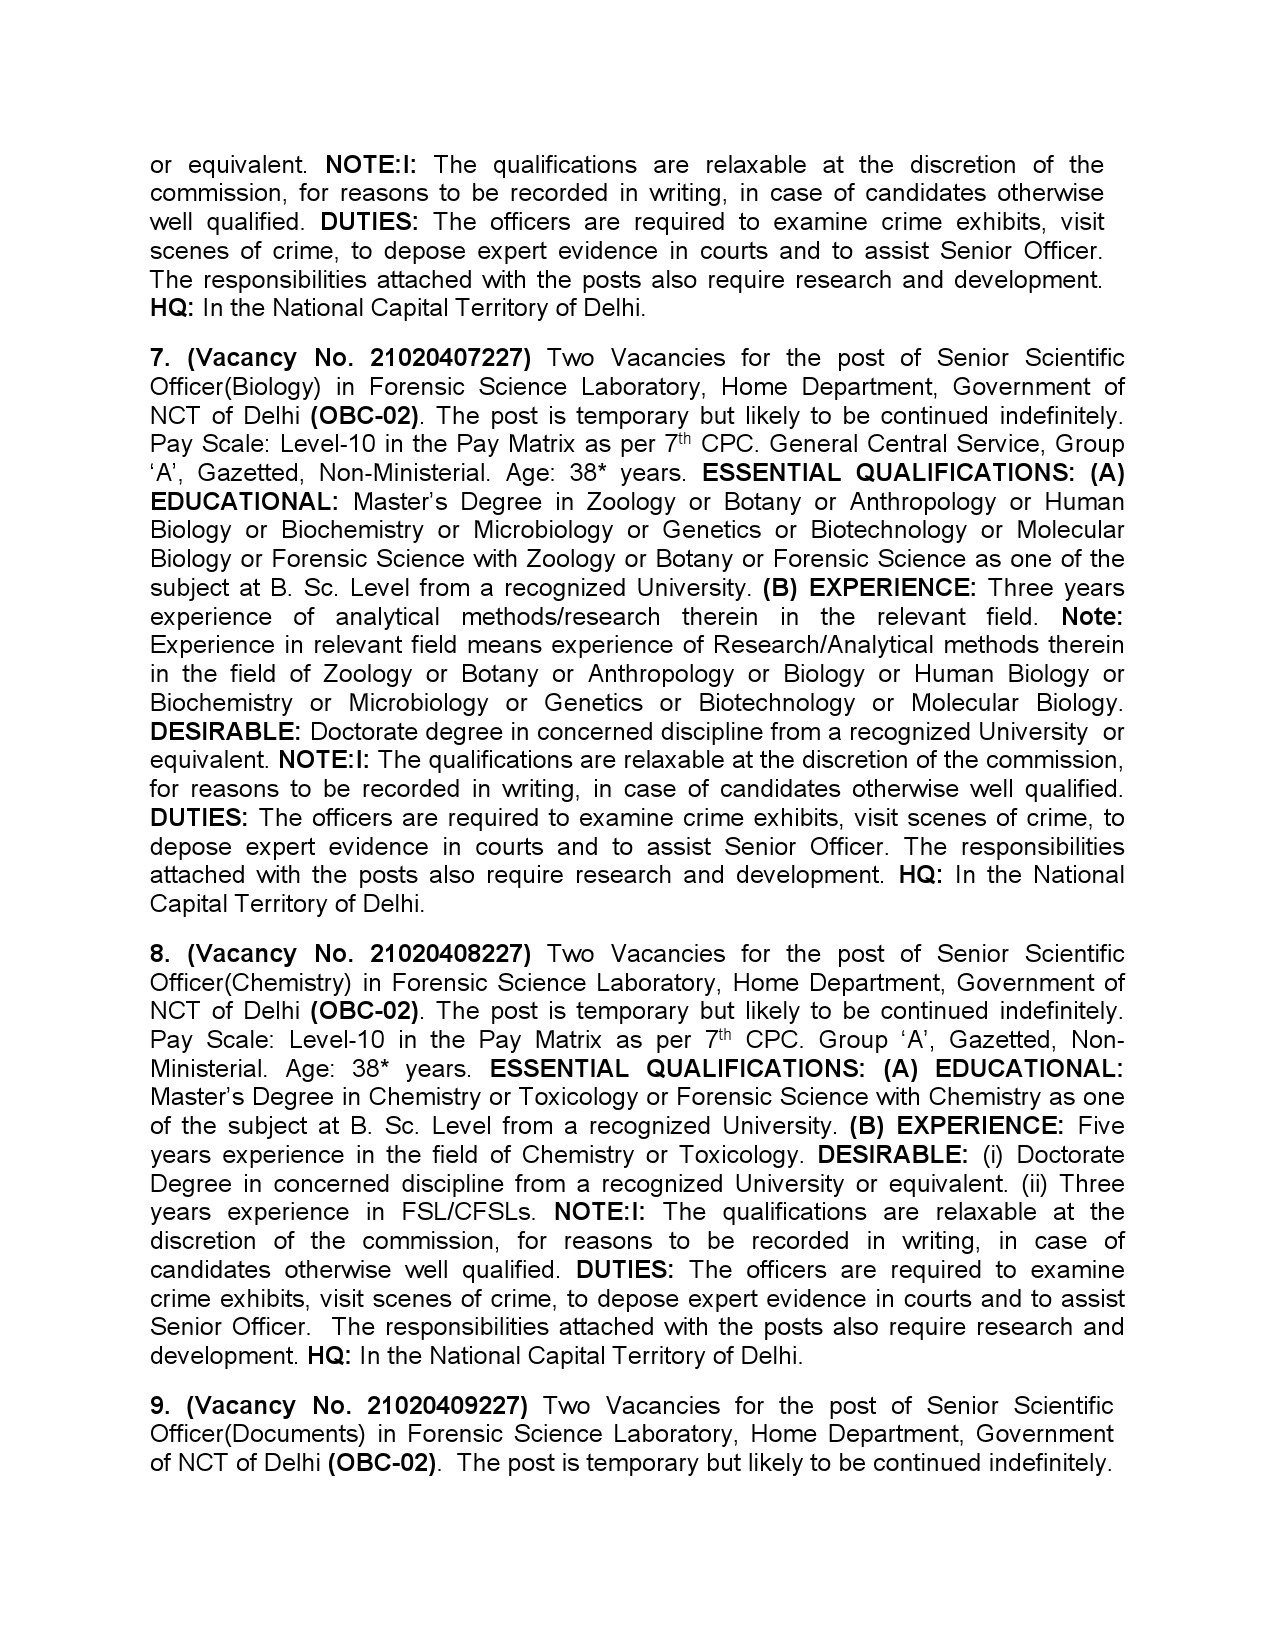 UPSC Notification 042021 for Multiple vacancies - Notification Image 4